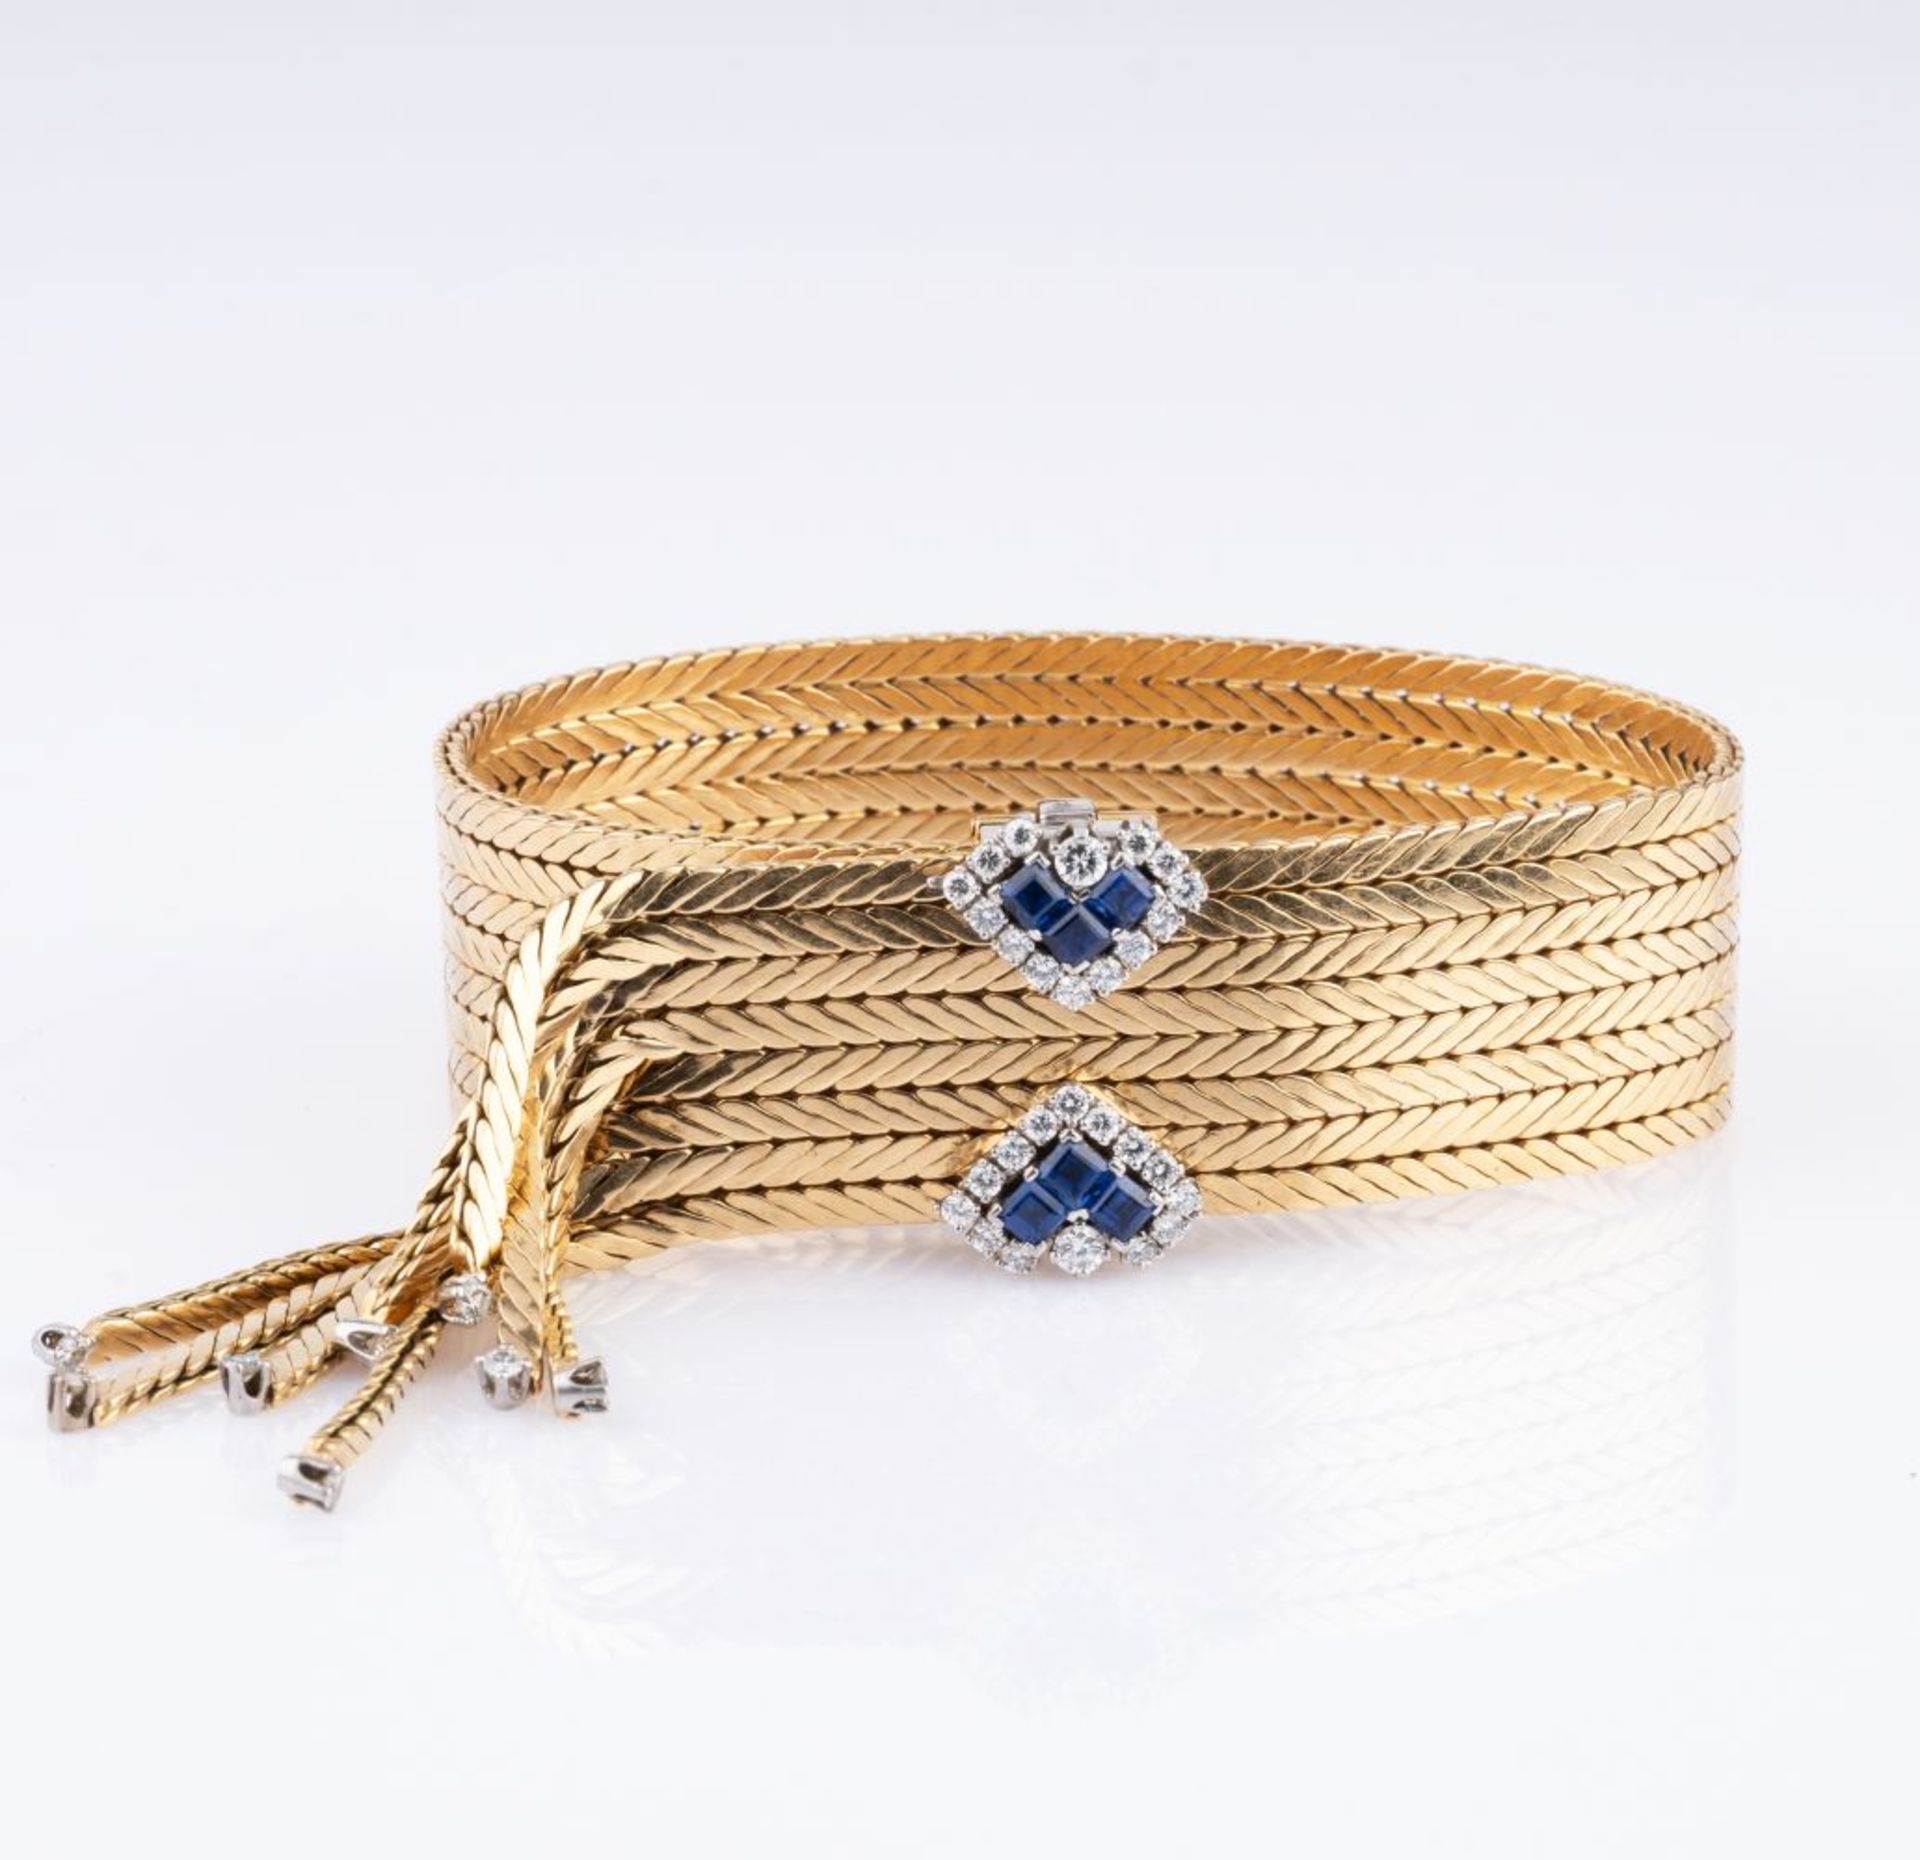 A rare Vintage Gold Bracelet with Sapphire Diamond Clasp.